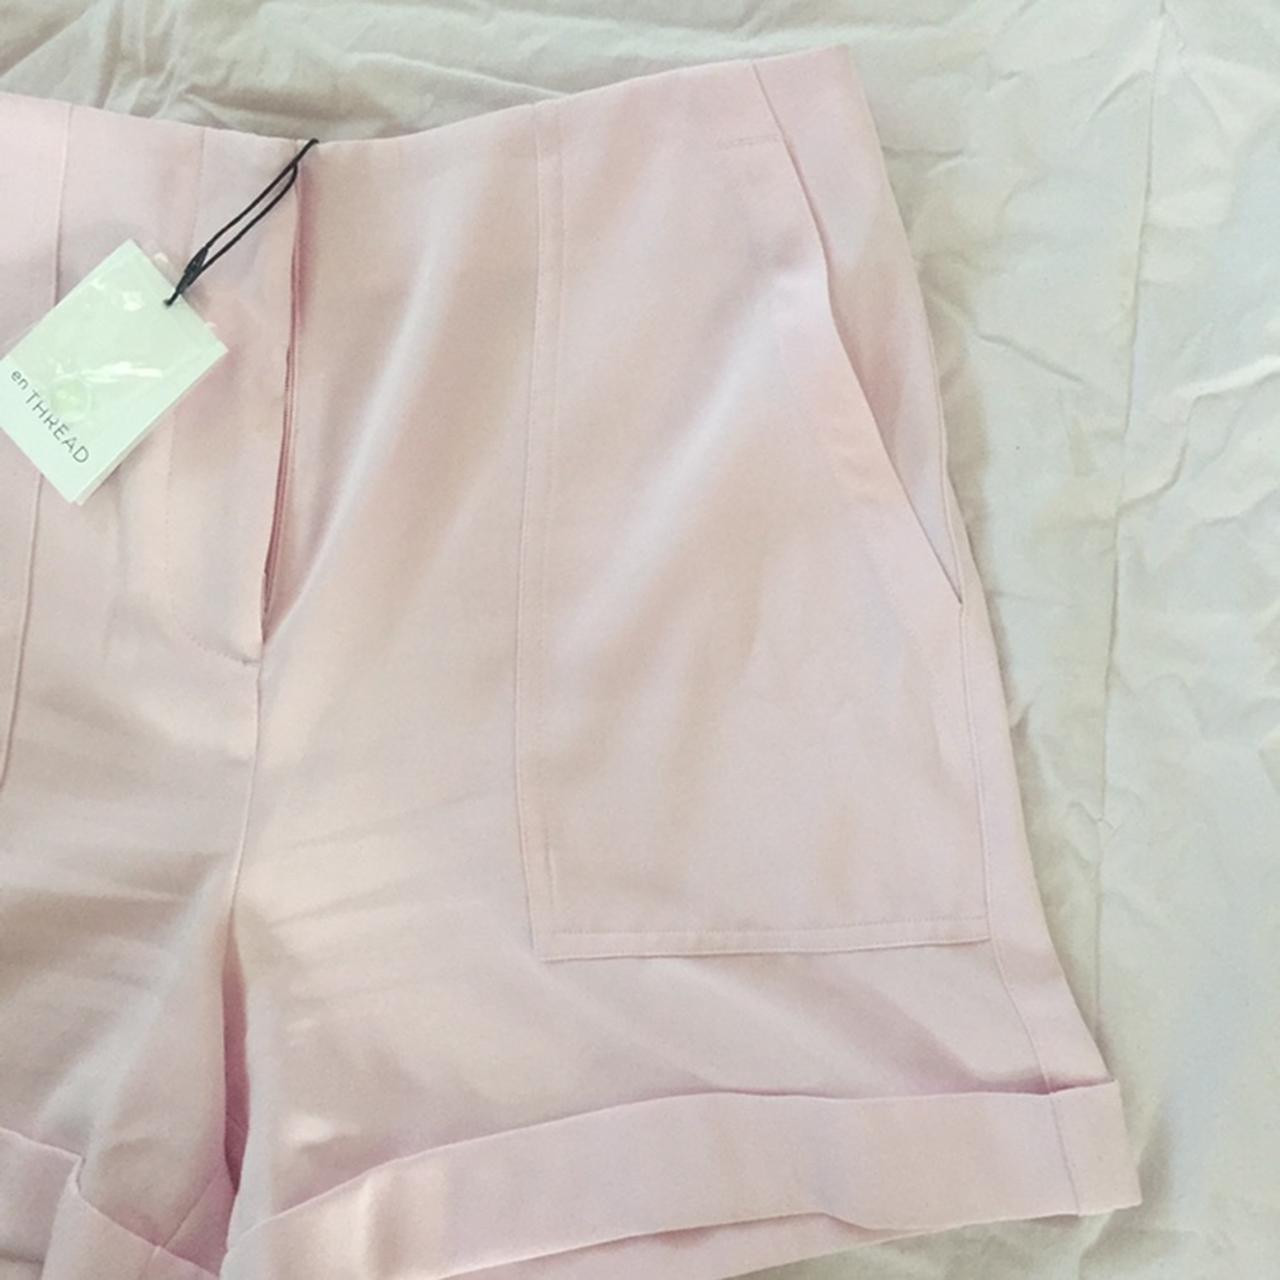 Loose Threads Women's Pink Shorts (2)